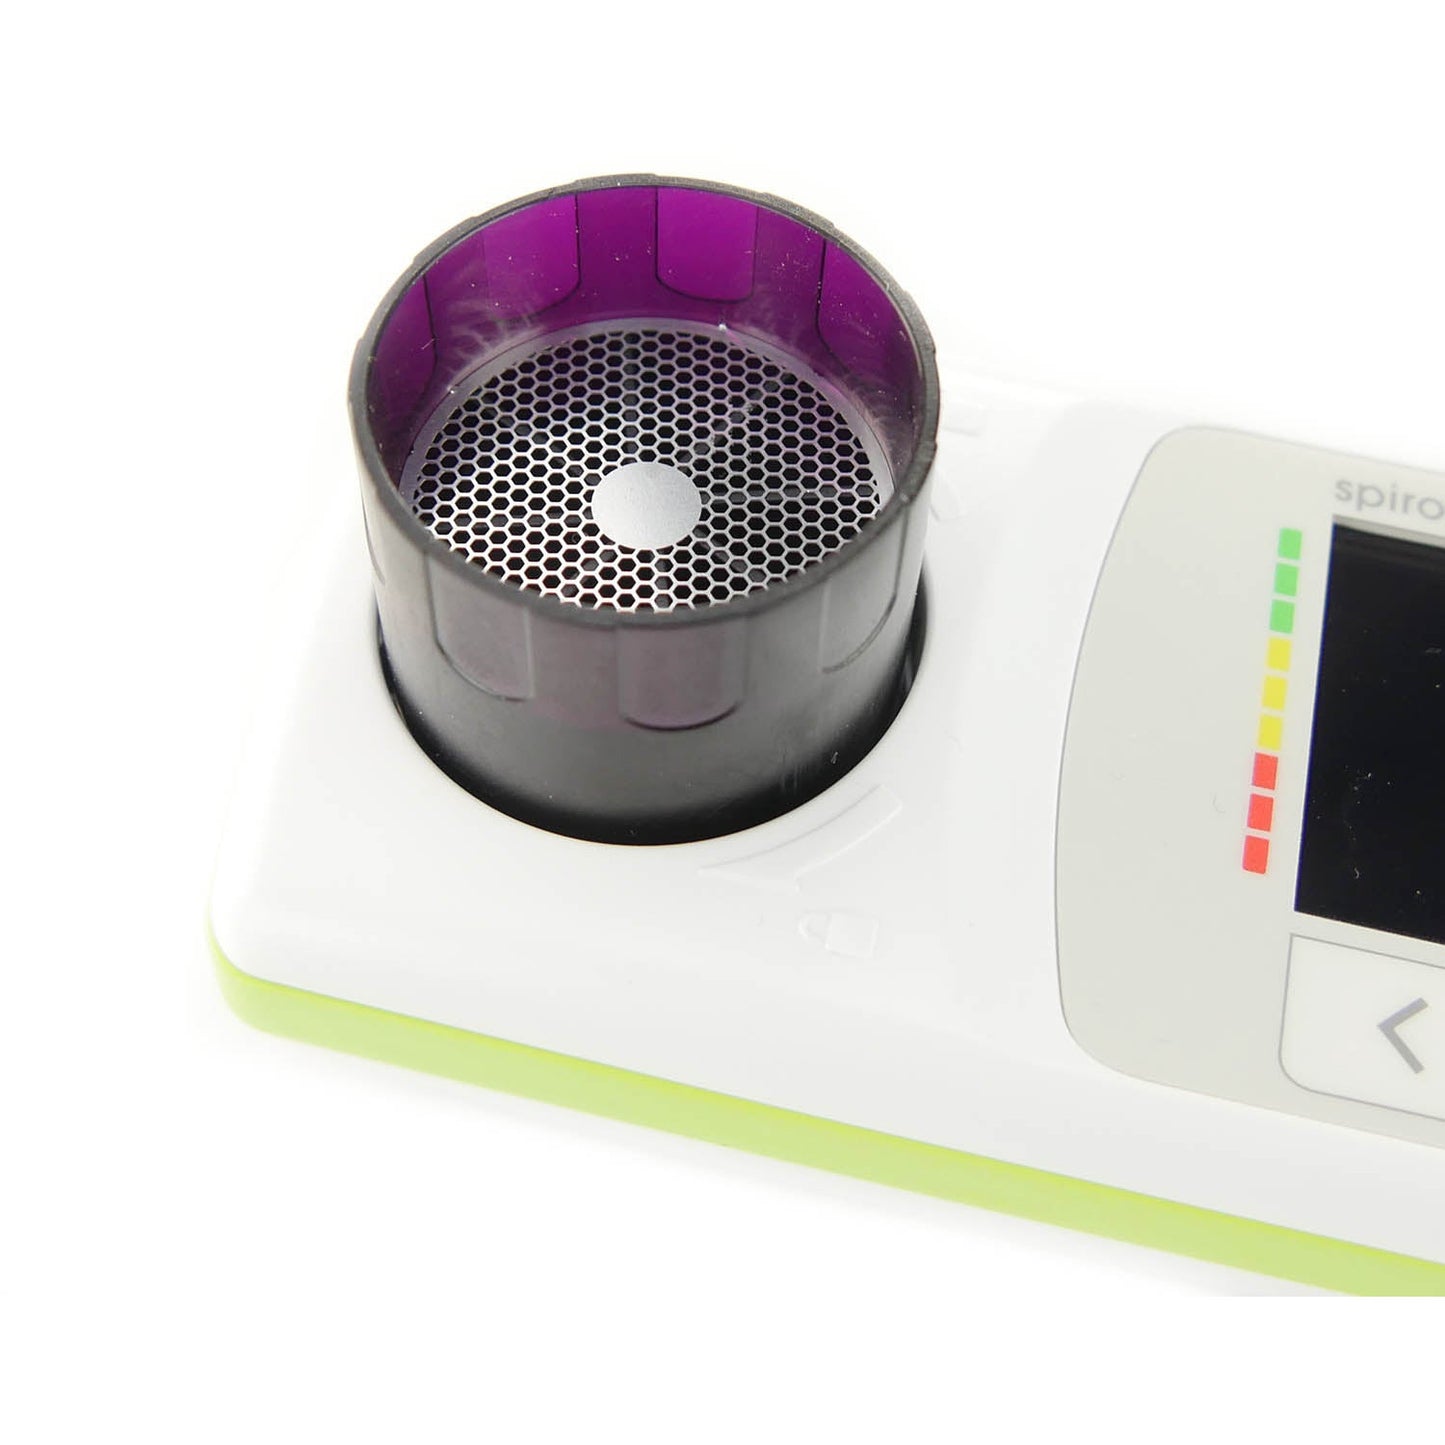 MIR Spirobank II Basic Spirometer with 50 Disposable Turbines